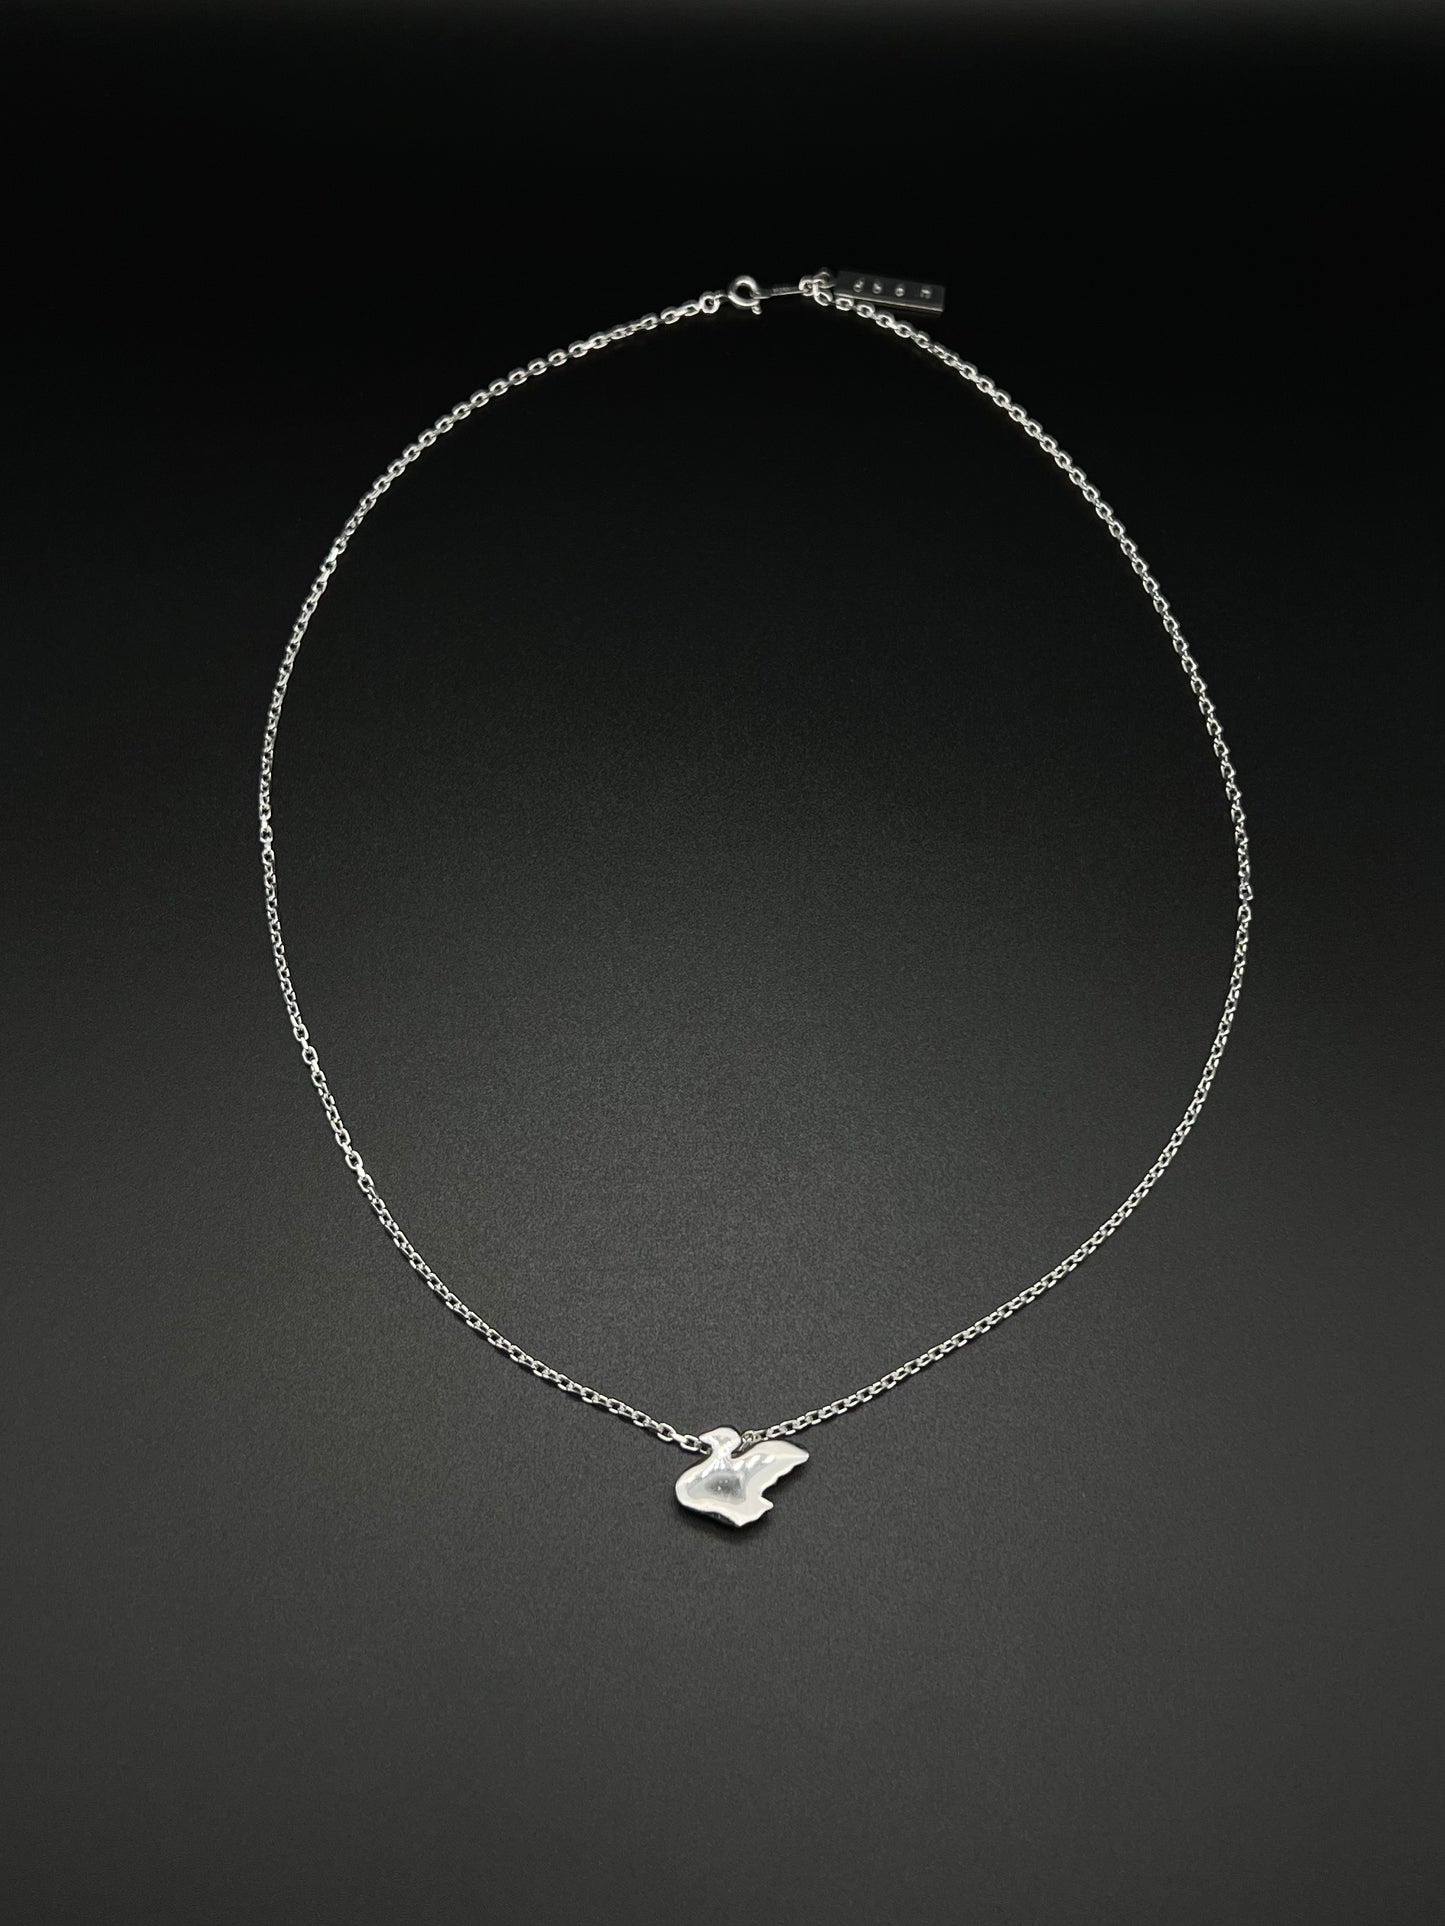 Swan necklace -silver925